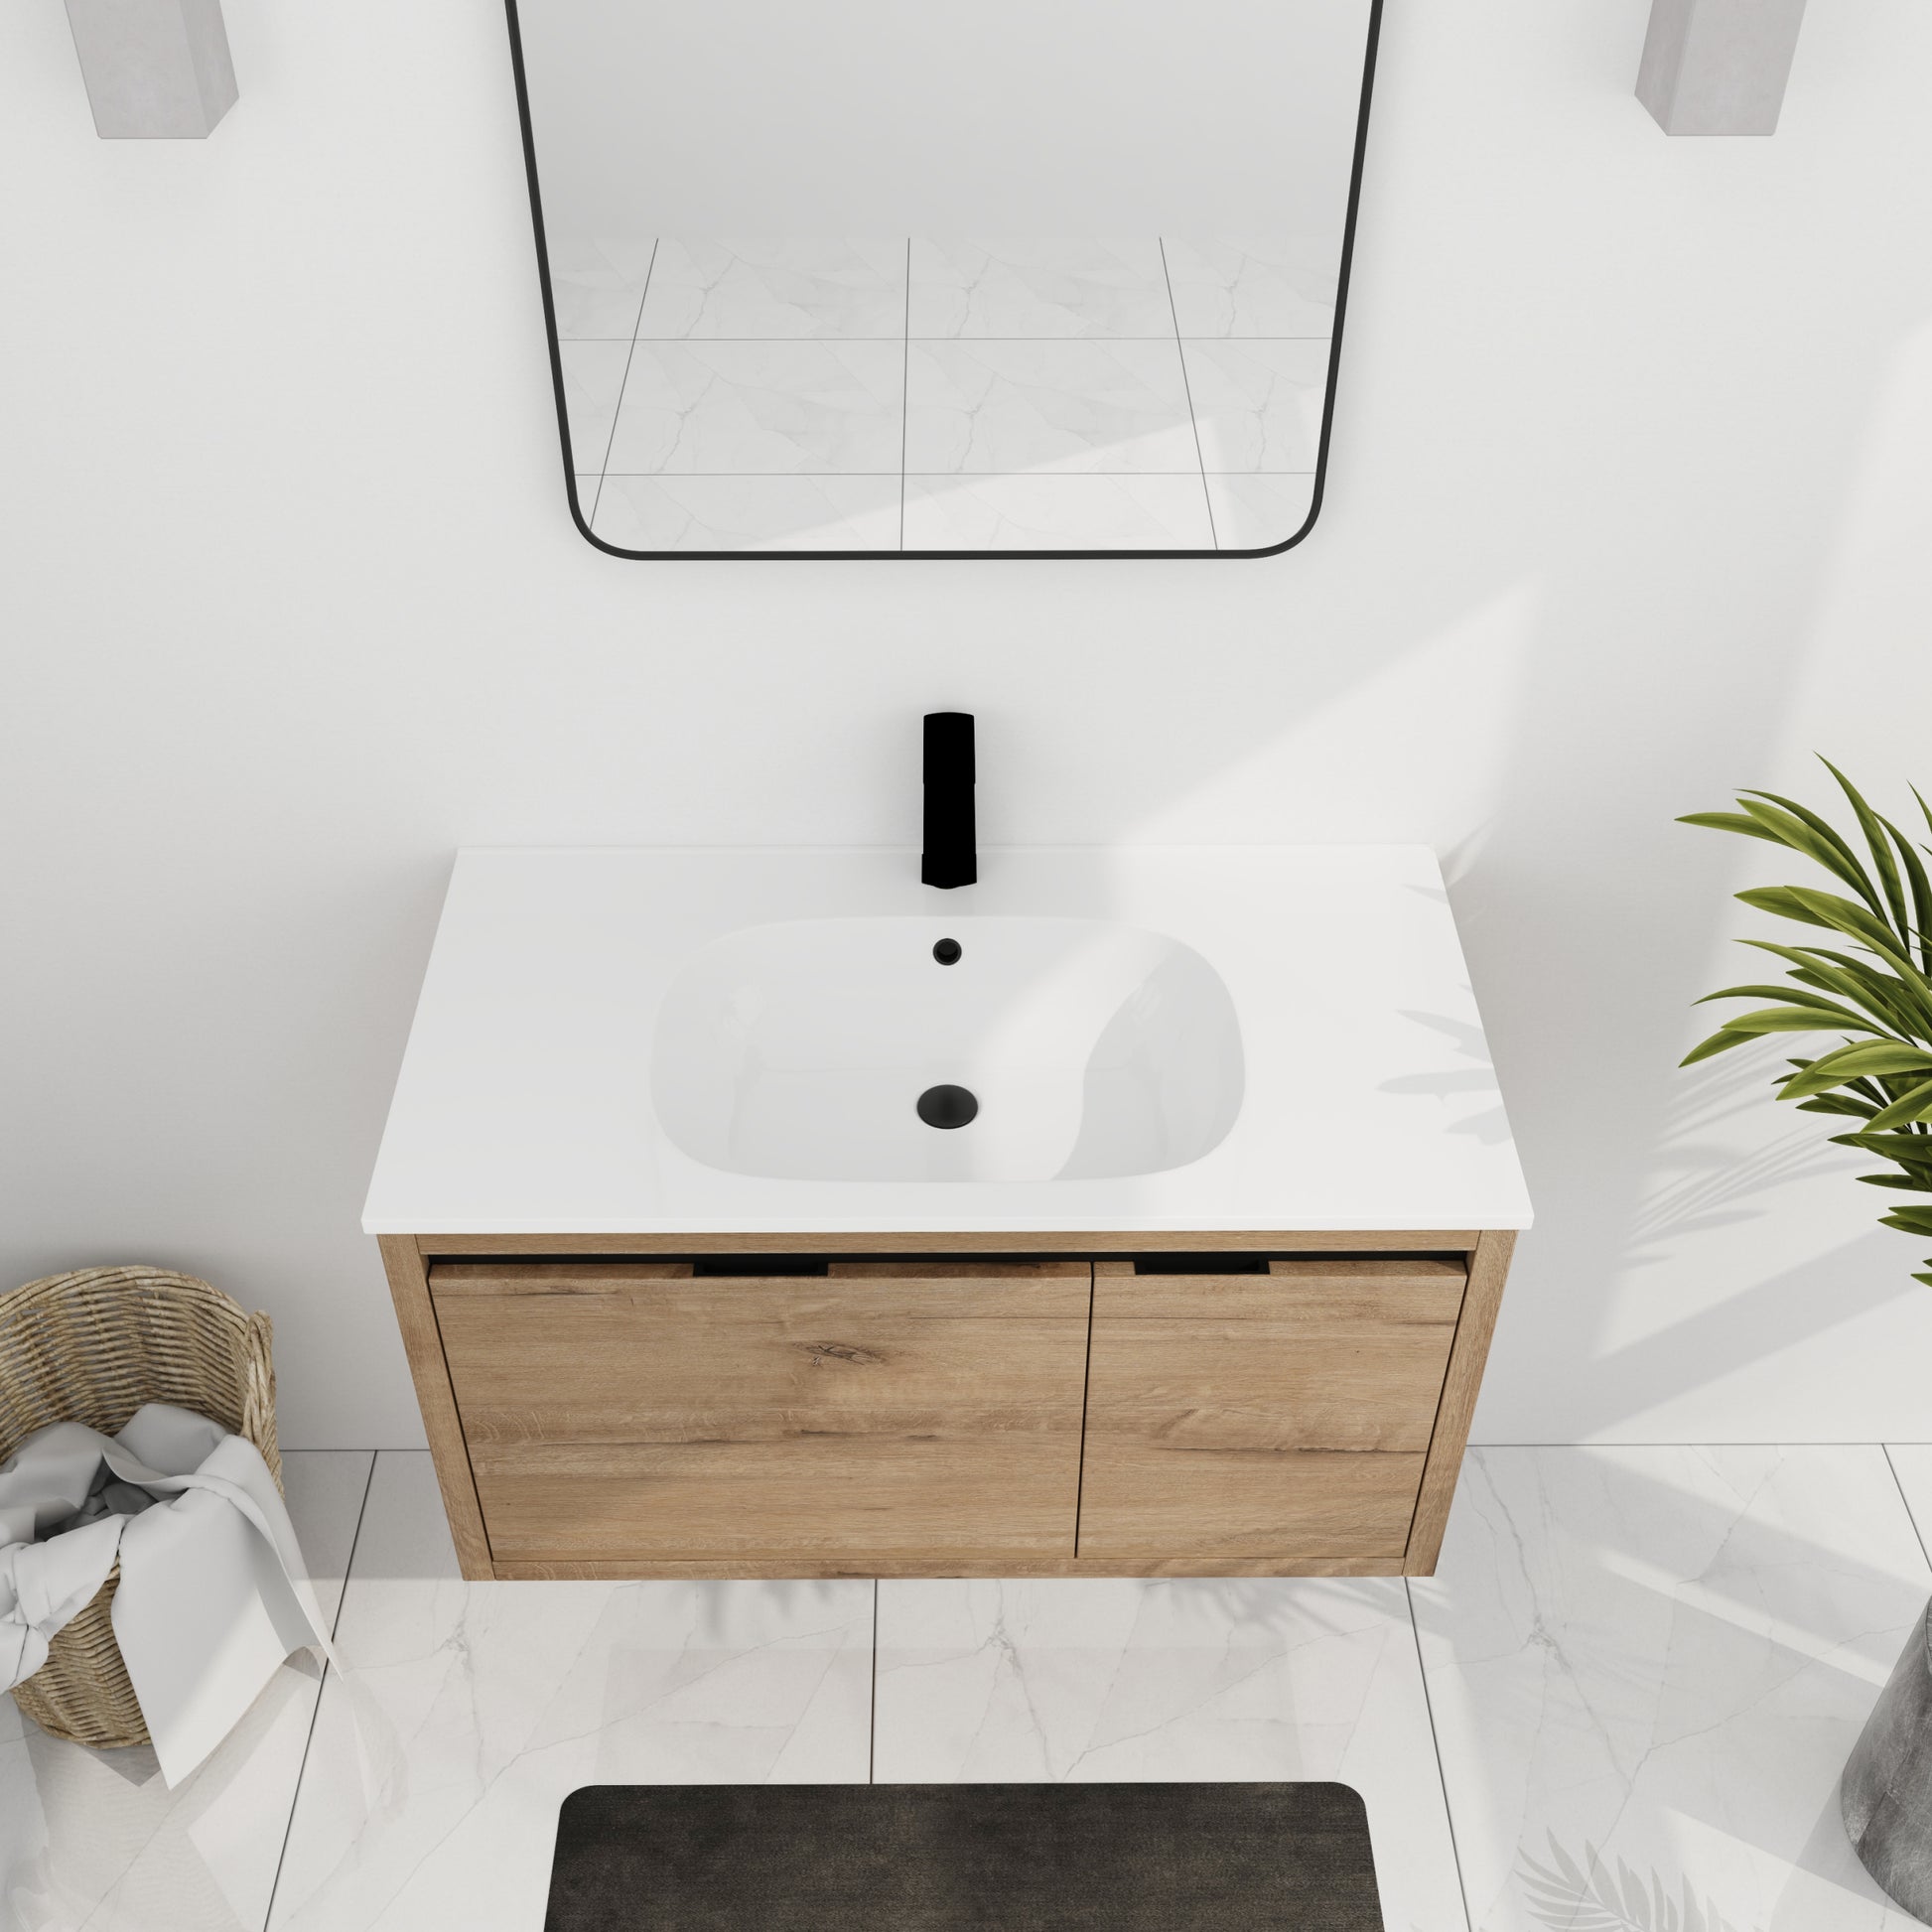 36 Inch Wall Mounted Bathroom Vanity With Gel Sink 1-imitative oak-1-bathroom-wall